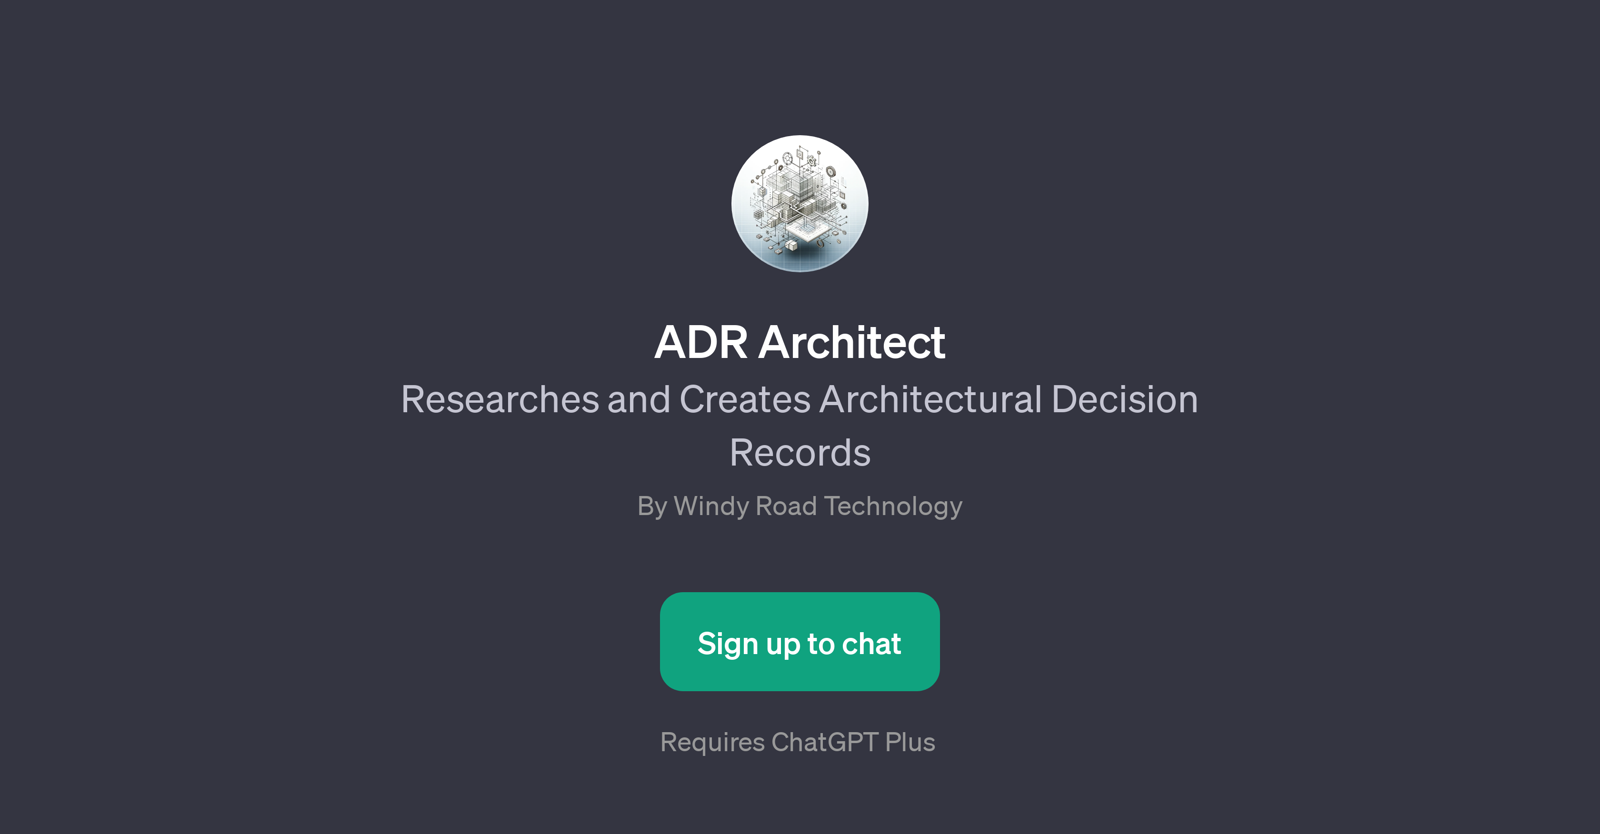 ADR Architect website